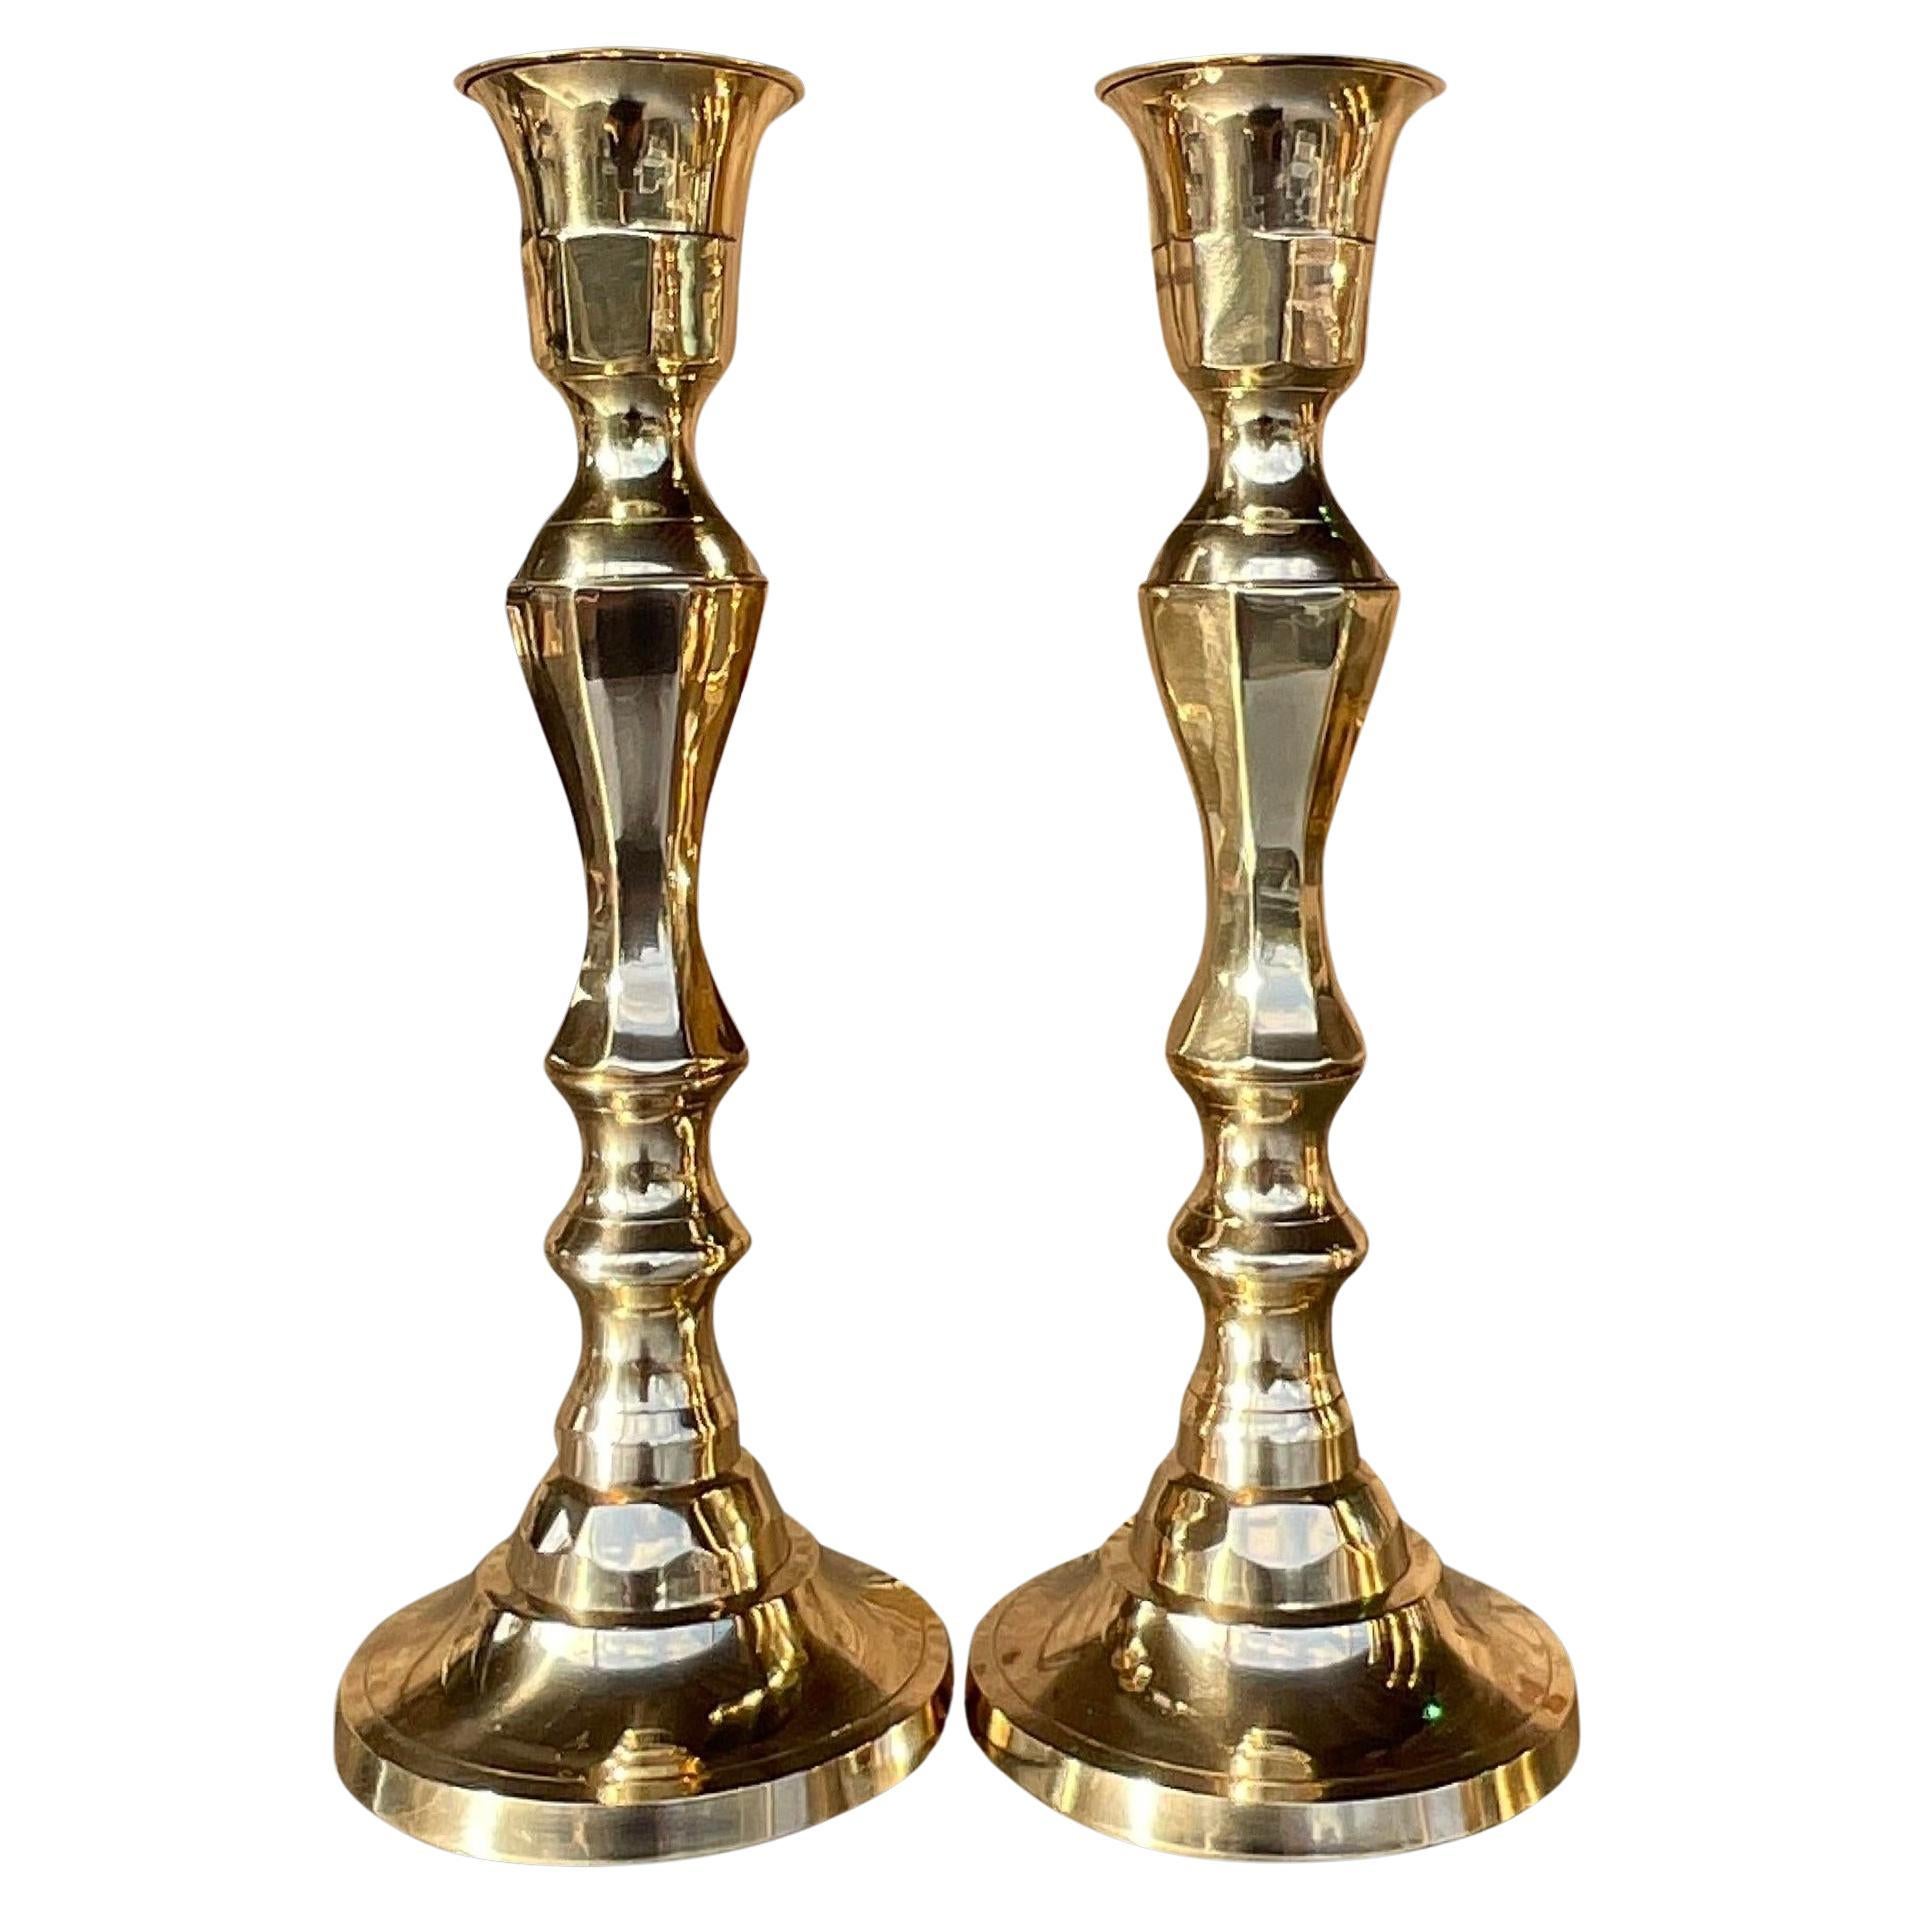 Vintage Regency Faceted Polished Brass Candlesticks - a Pair For Sale